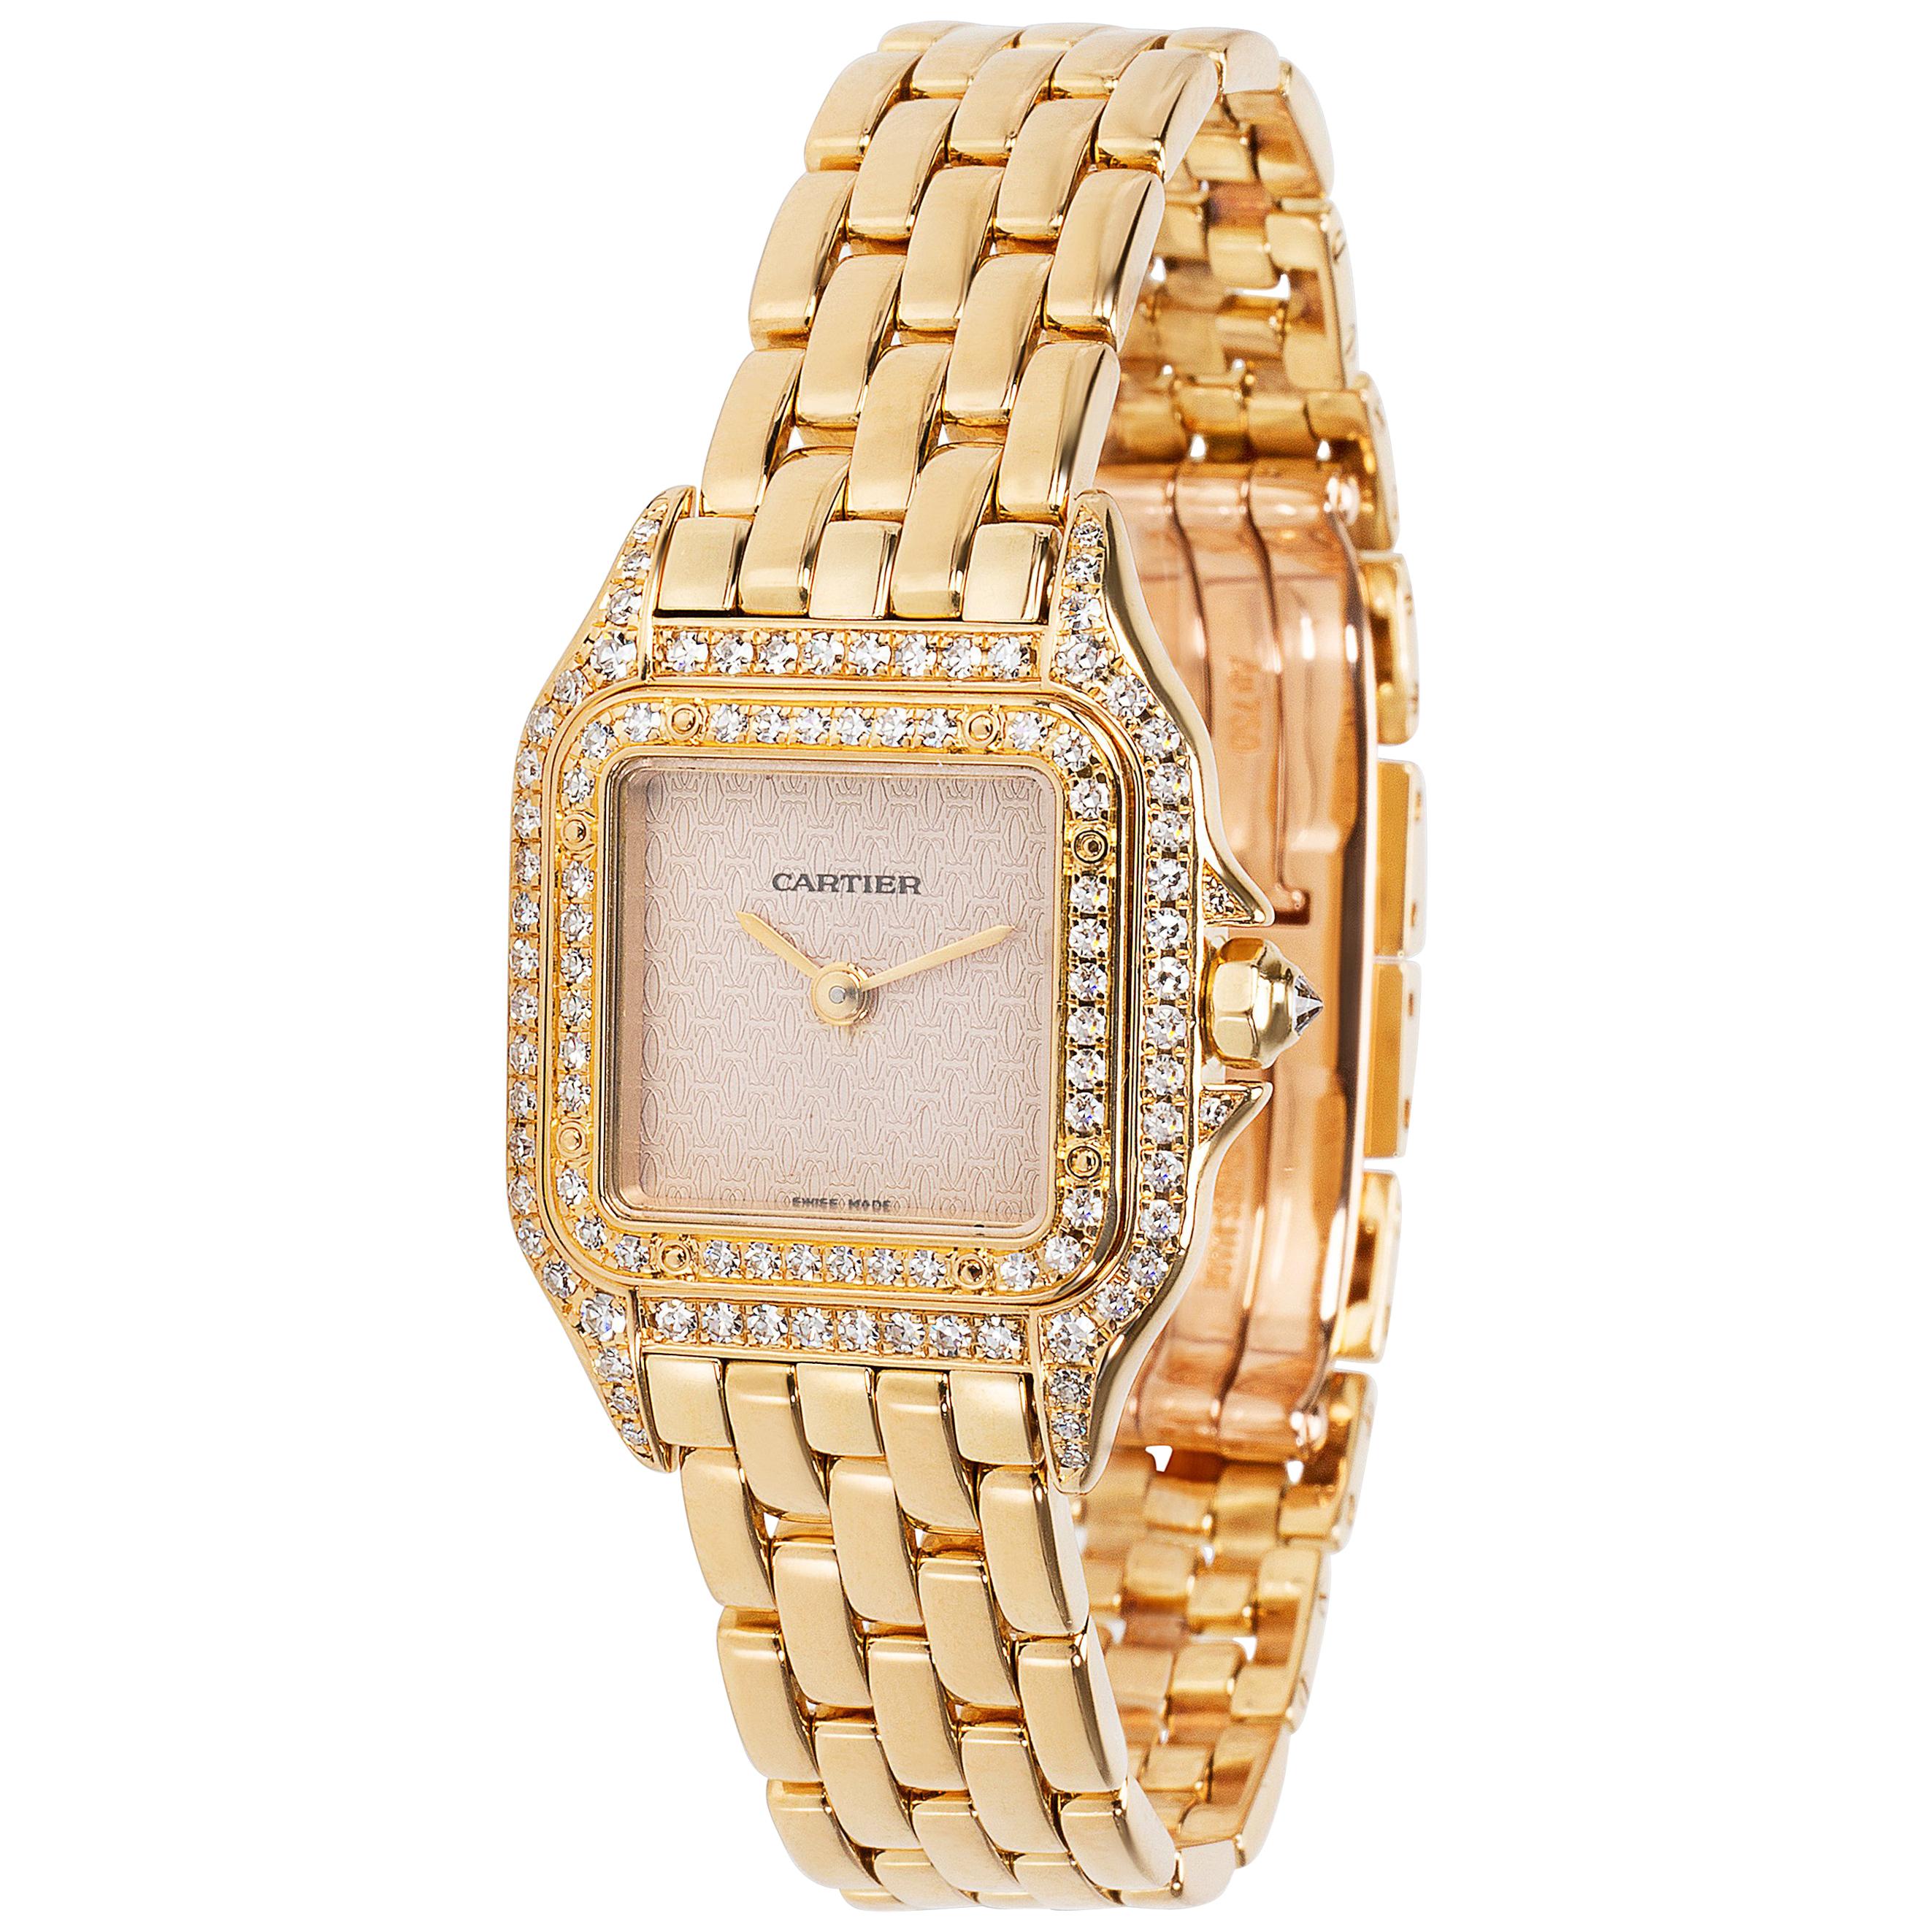 Cartier Panther 1280 Women's Watch in 18 Karat Yellow Gold